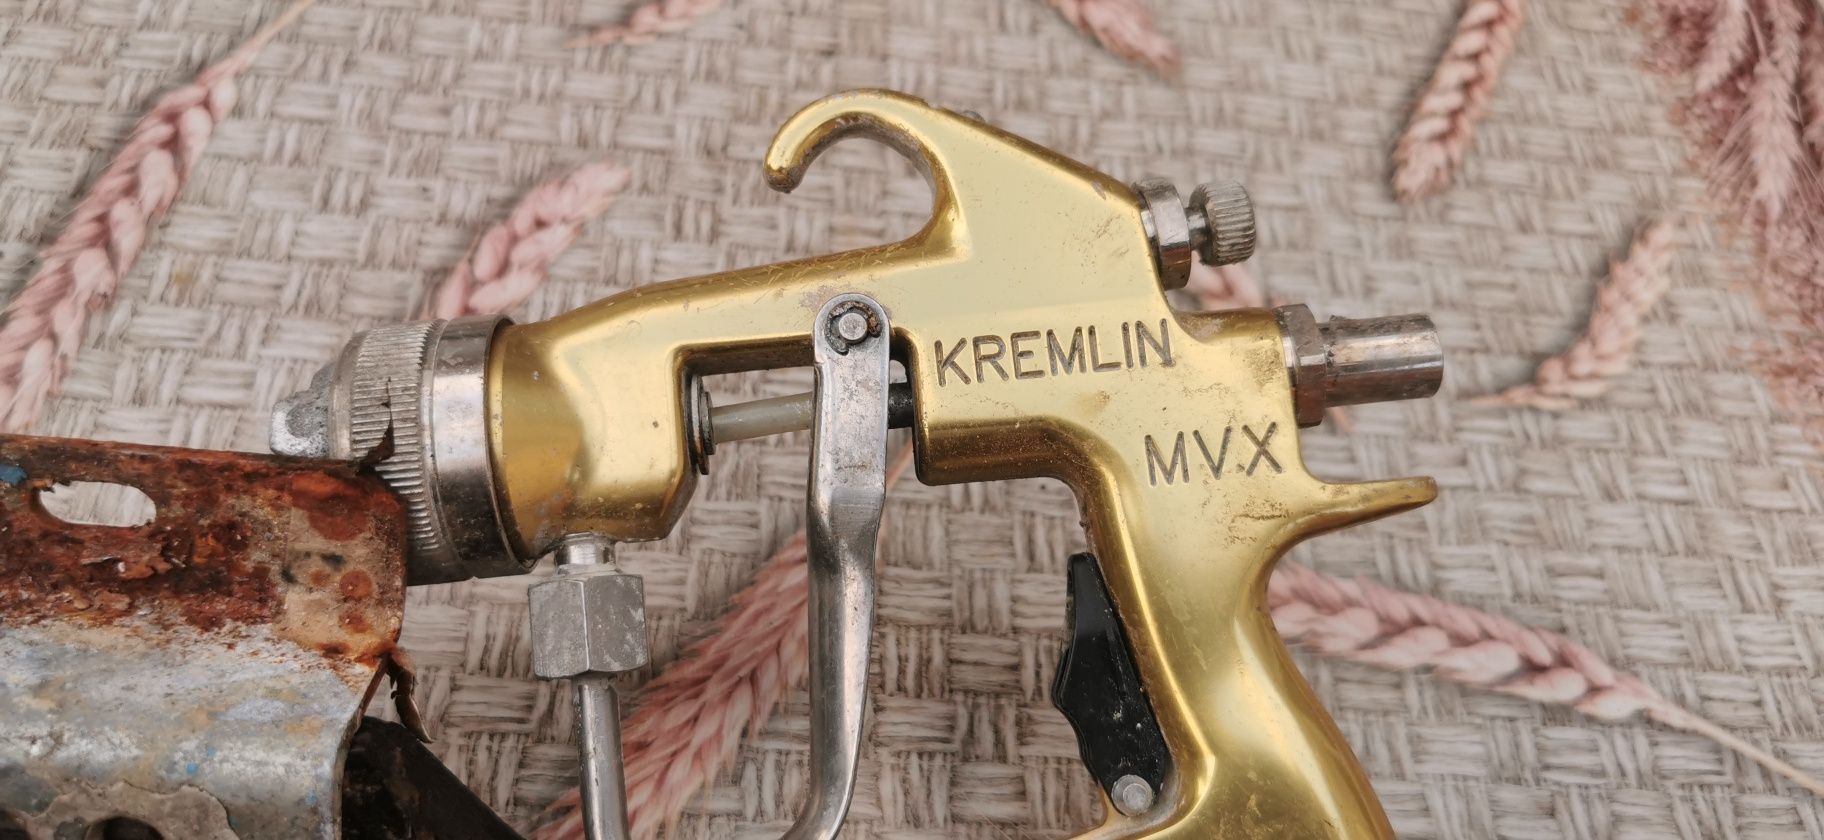 Kremlin AirMix pompa de vopsit profesionala